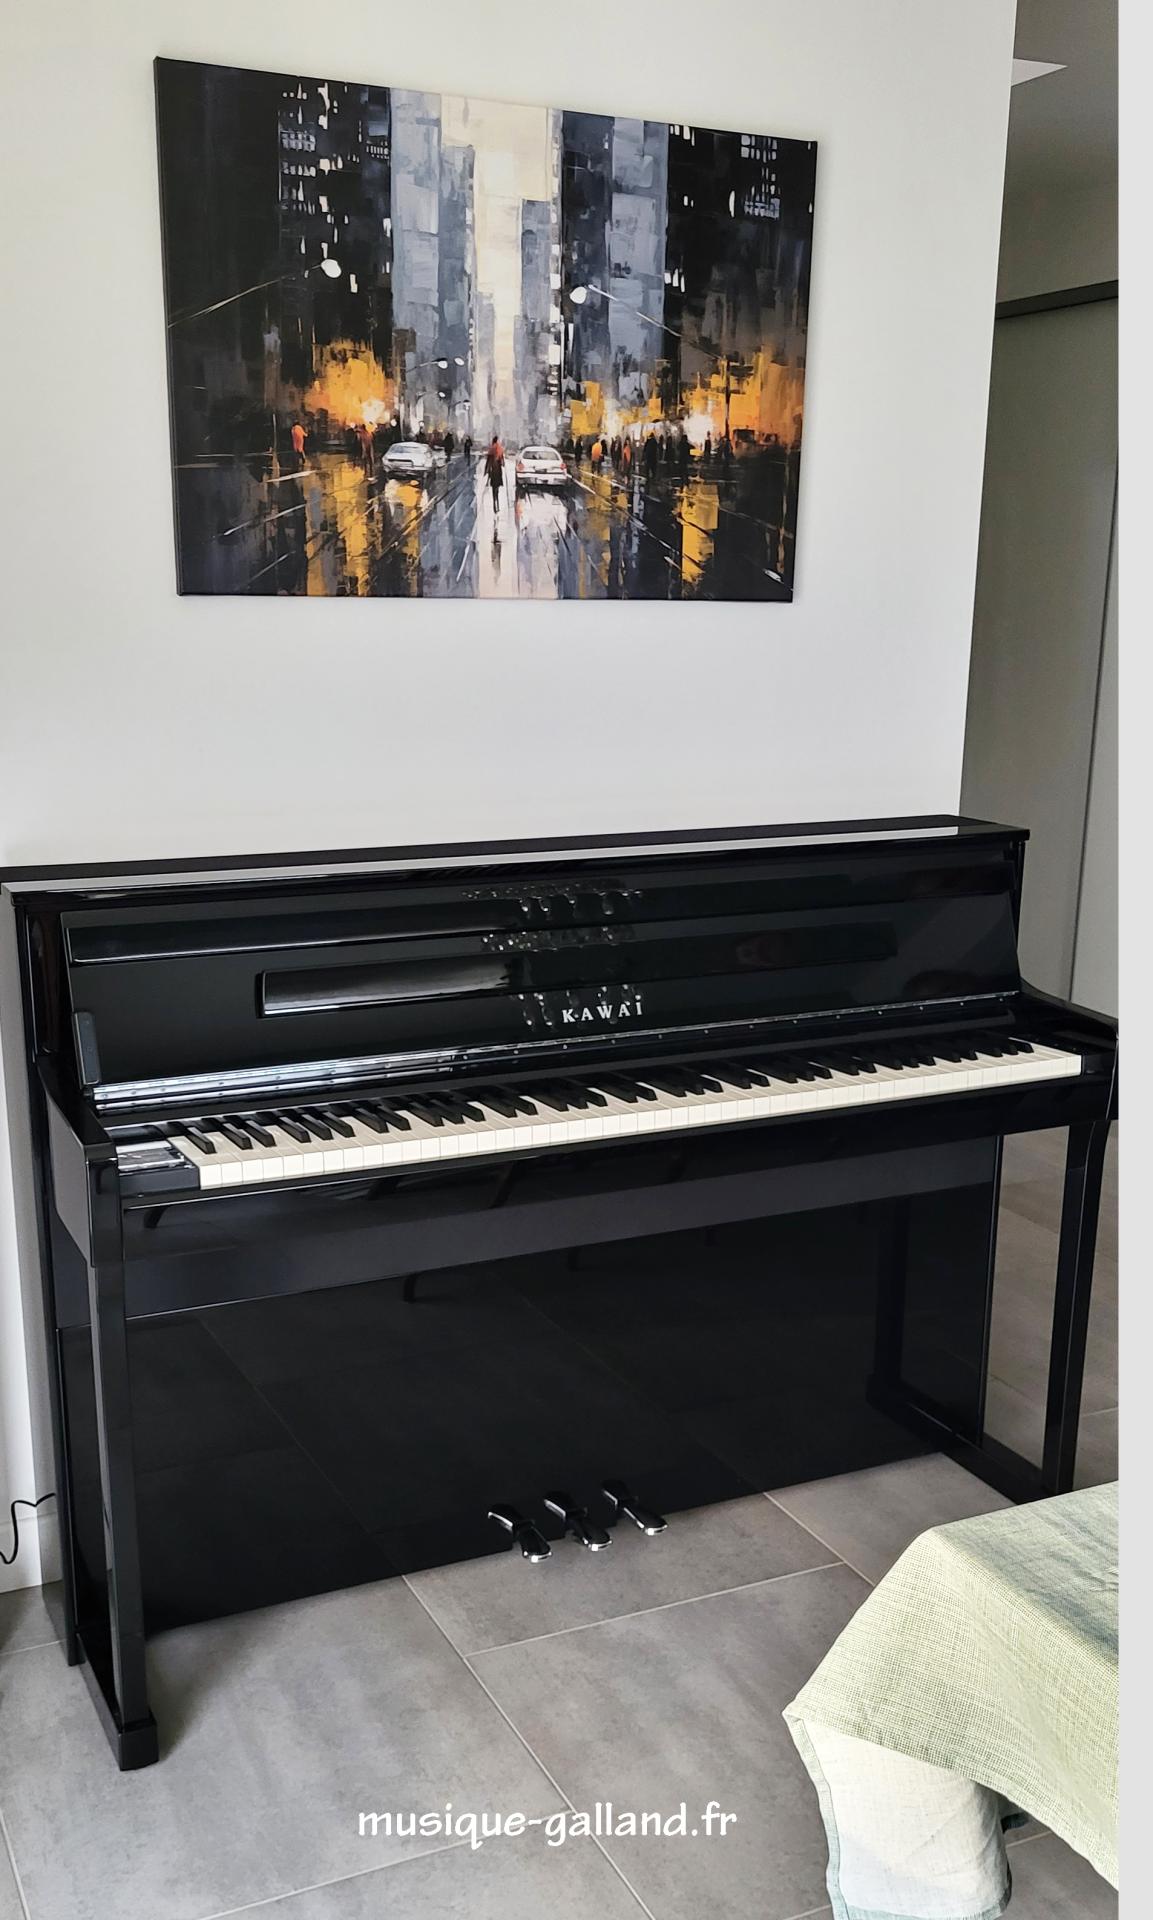 Banquette de concert hidrau-model X10 - FRANCE PIANOS